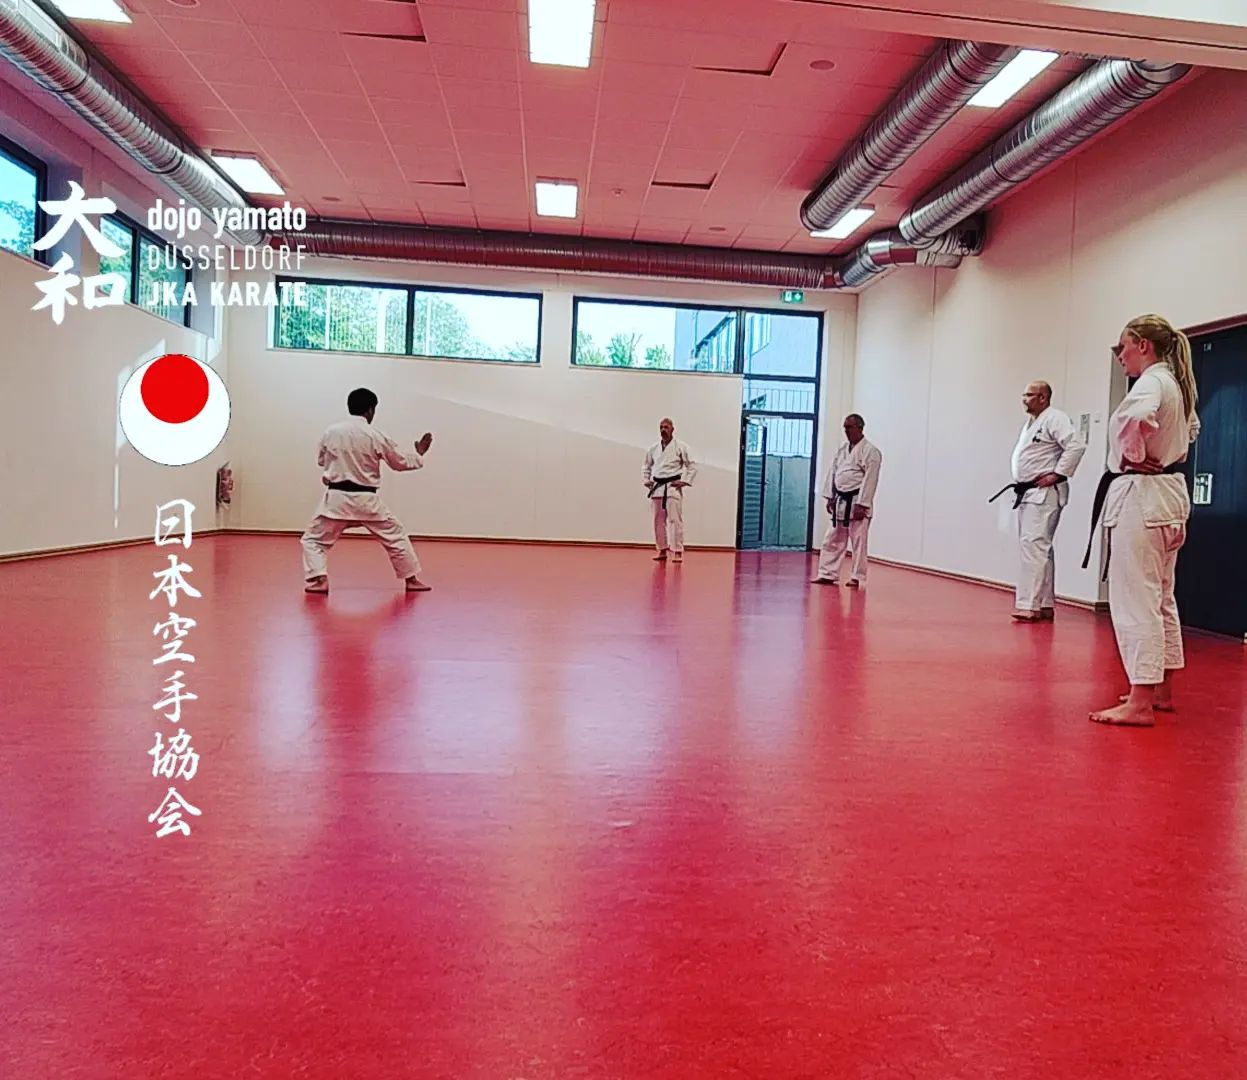 Training im Dojo Yamato Düsseldorf e.V.🥋
Trainer Keigo Shimizu 🇯🇵
.
.
.
.
.
.
.
.
#karate #training #fun #jka #djkb #kihon #kata #kumite #düsseldorf #duesseldorf #japan #sport #sportmotivation #shotokan #traditional #nrw #yamatoduesseldorf #fitness #fitnessmotivation #jkaKarate #jkakaratedo #neuss #ratingen #hilden #leverkusen #kaarst #selbstbstbewusstsein #selbstvertrauen